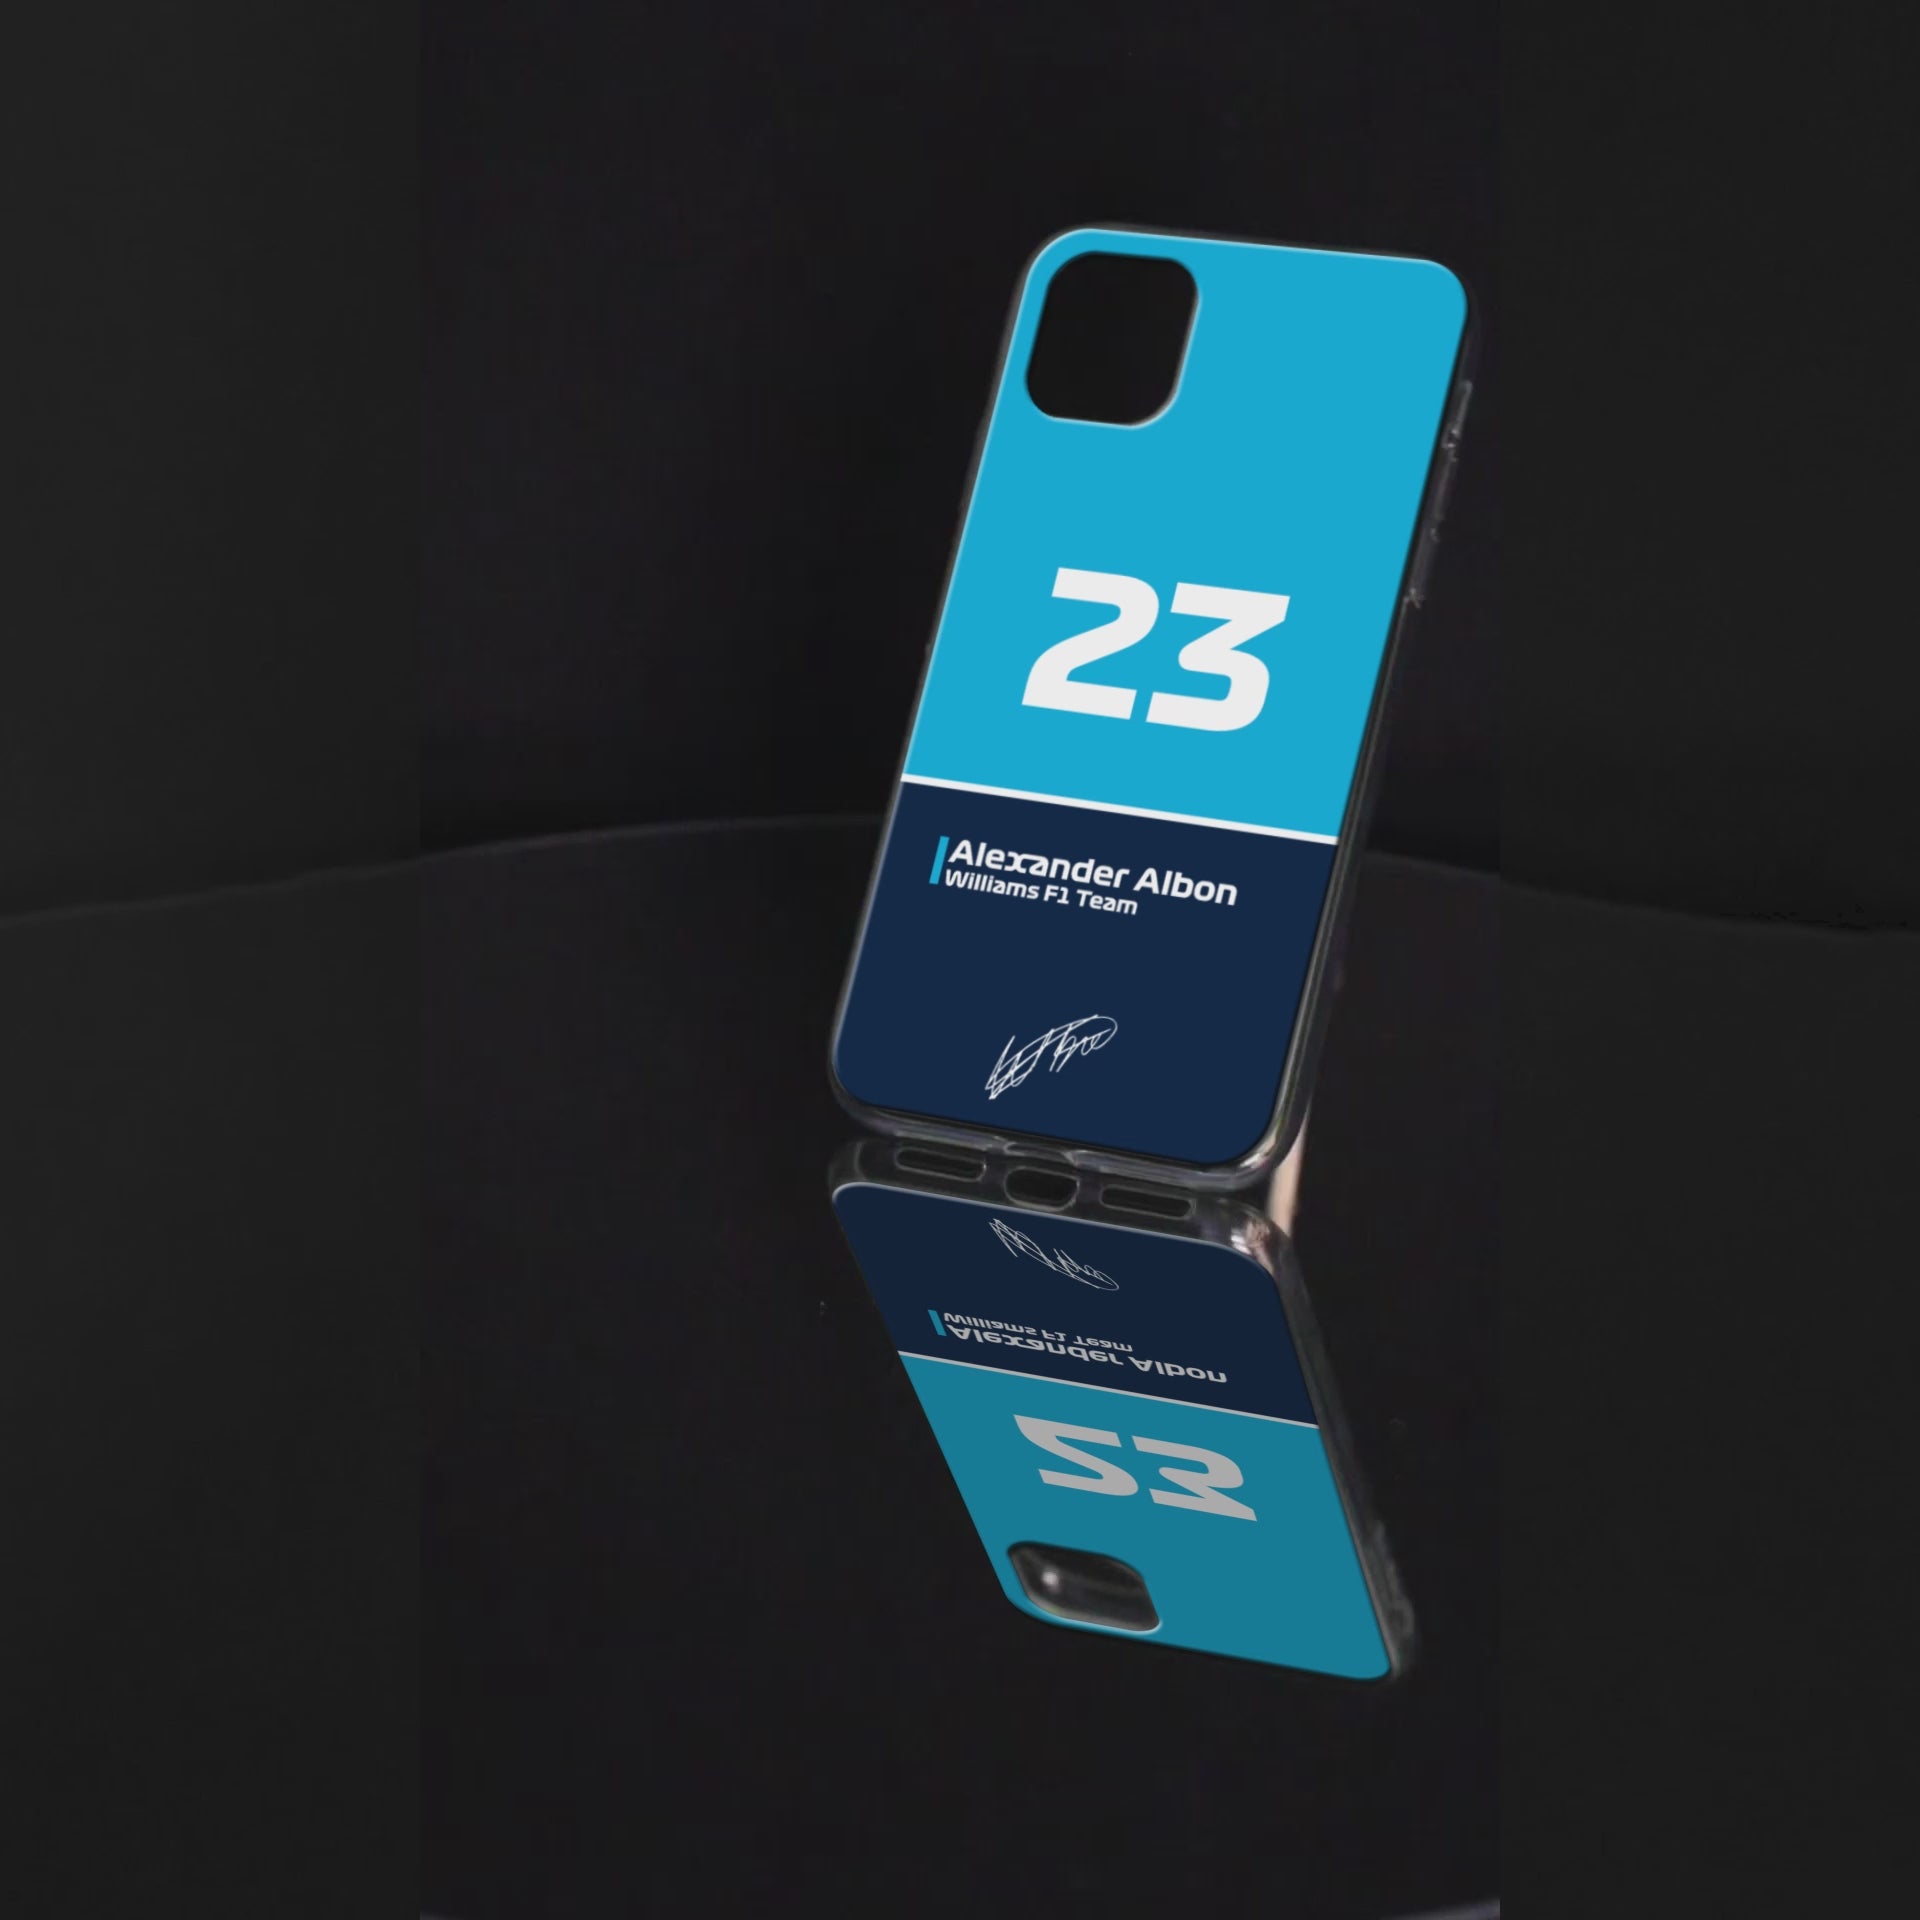 Alexander Albon Williams 23 Formula 1 Phone case. Iphone, Samsung, Huawei.